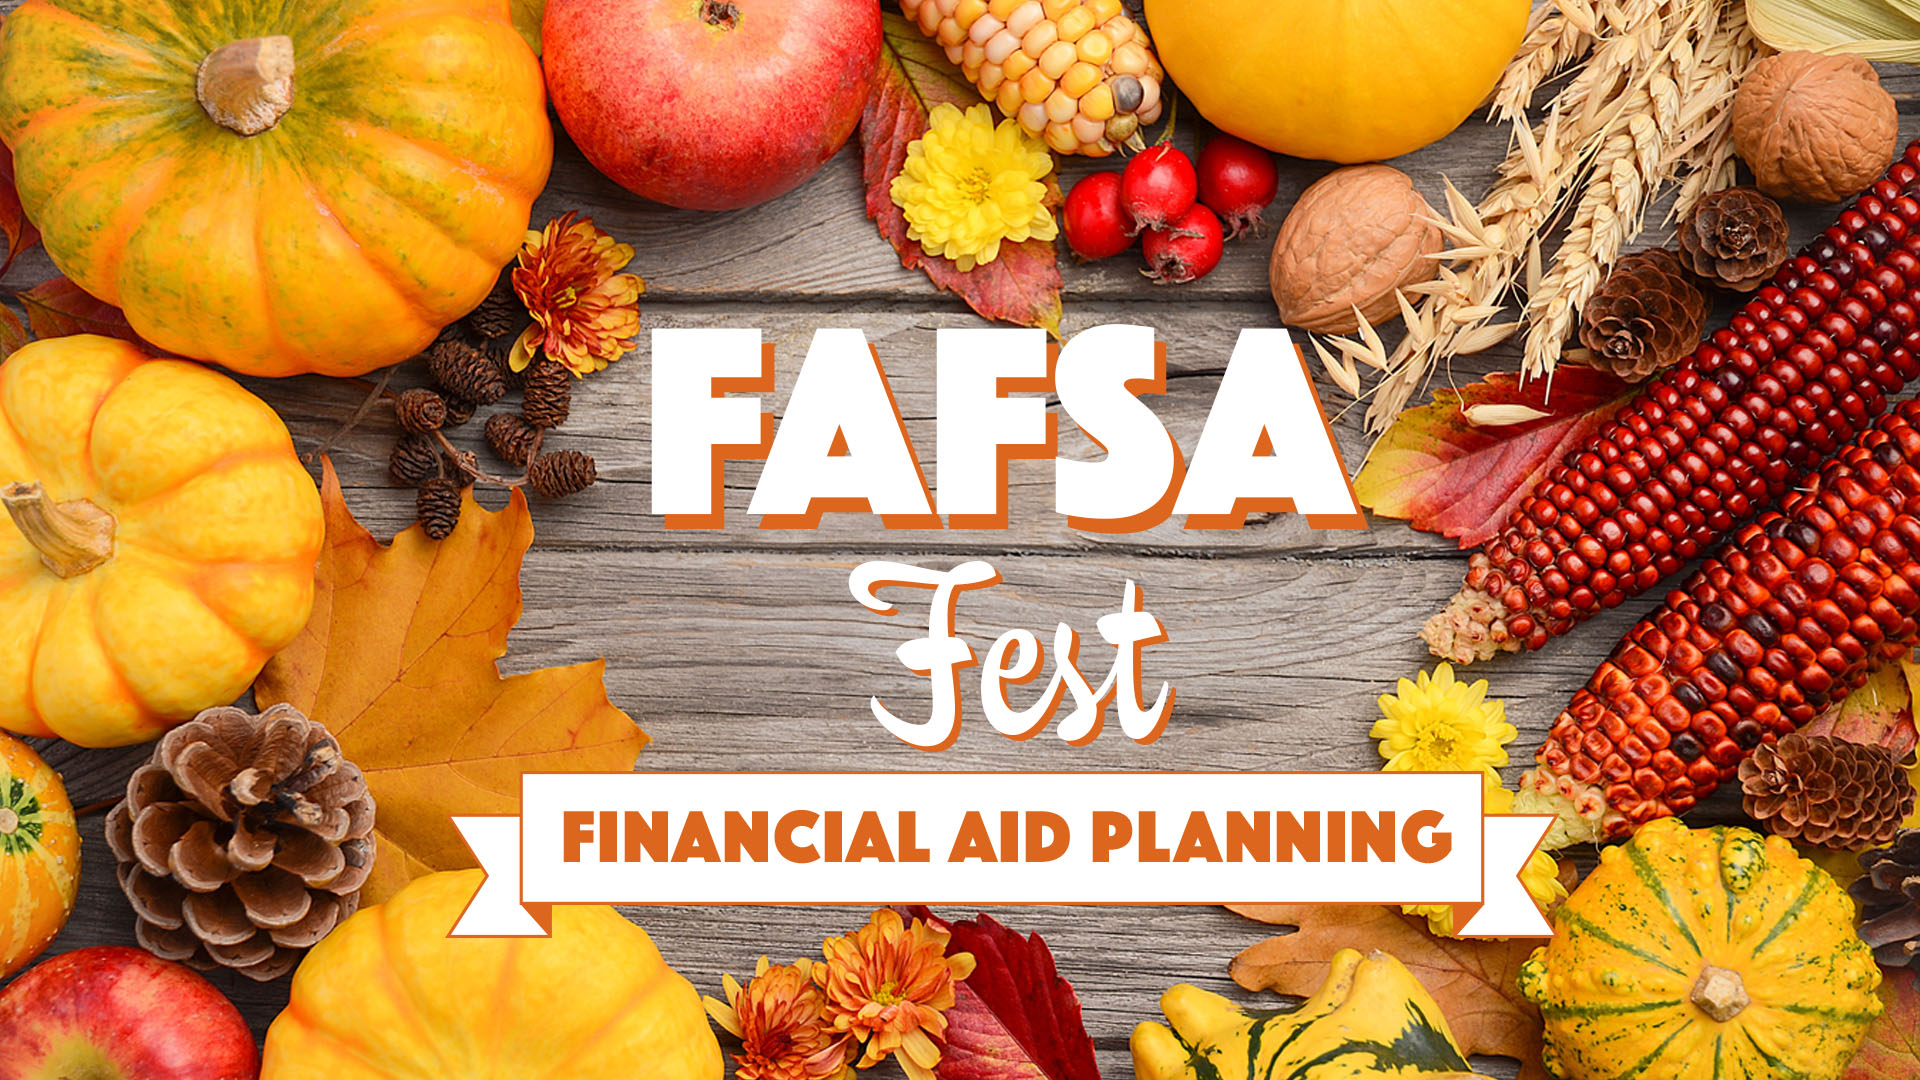 FAFSA Fest